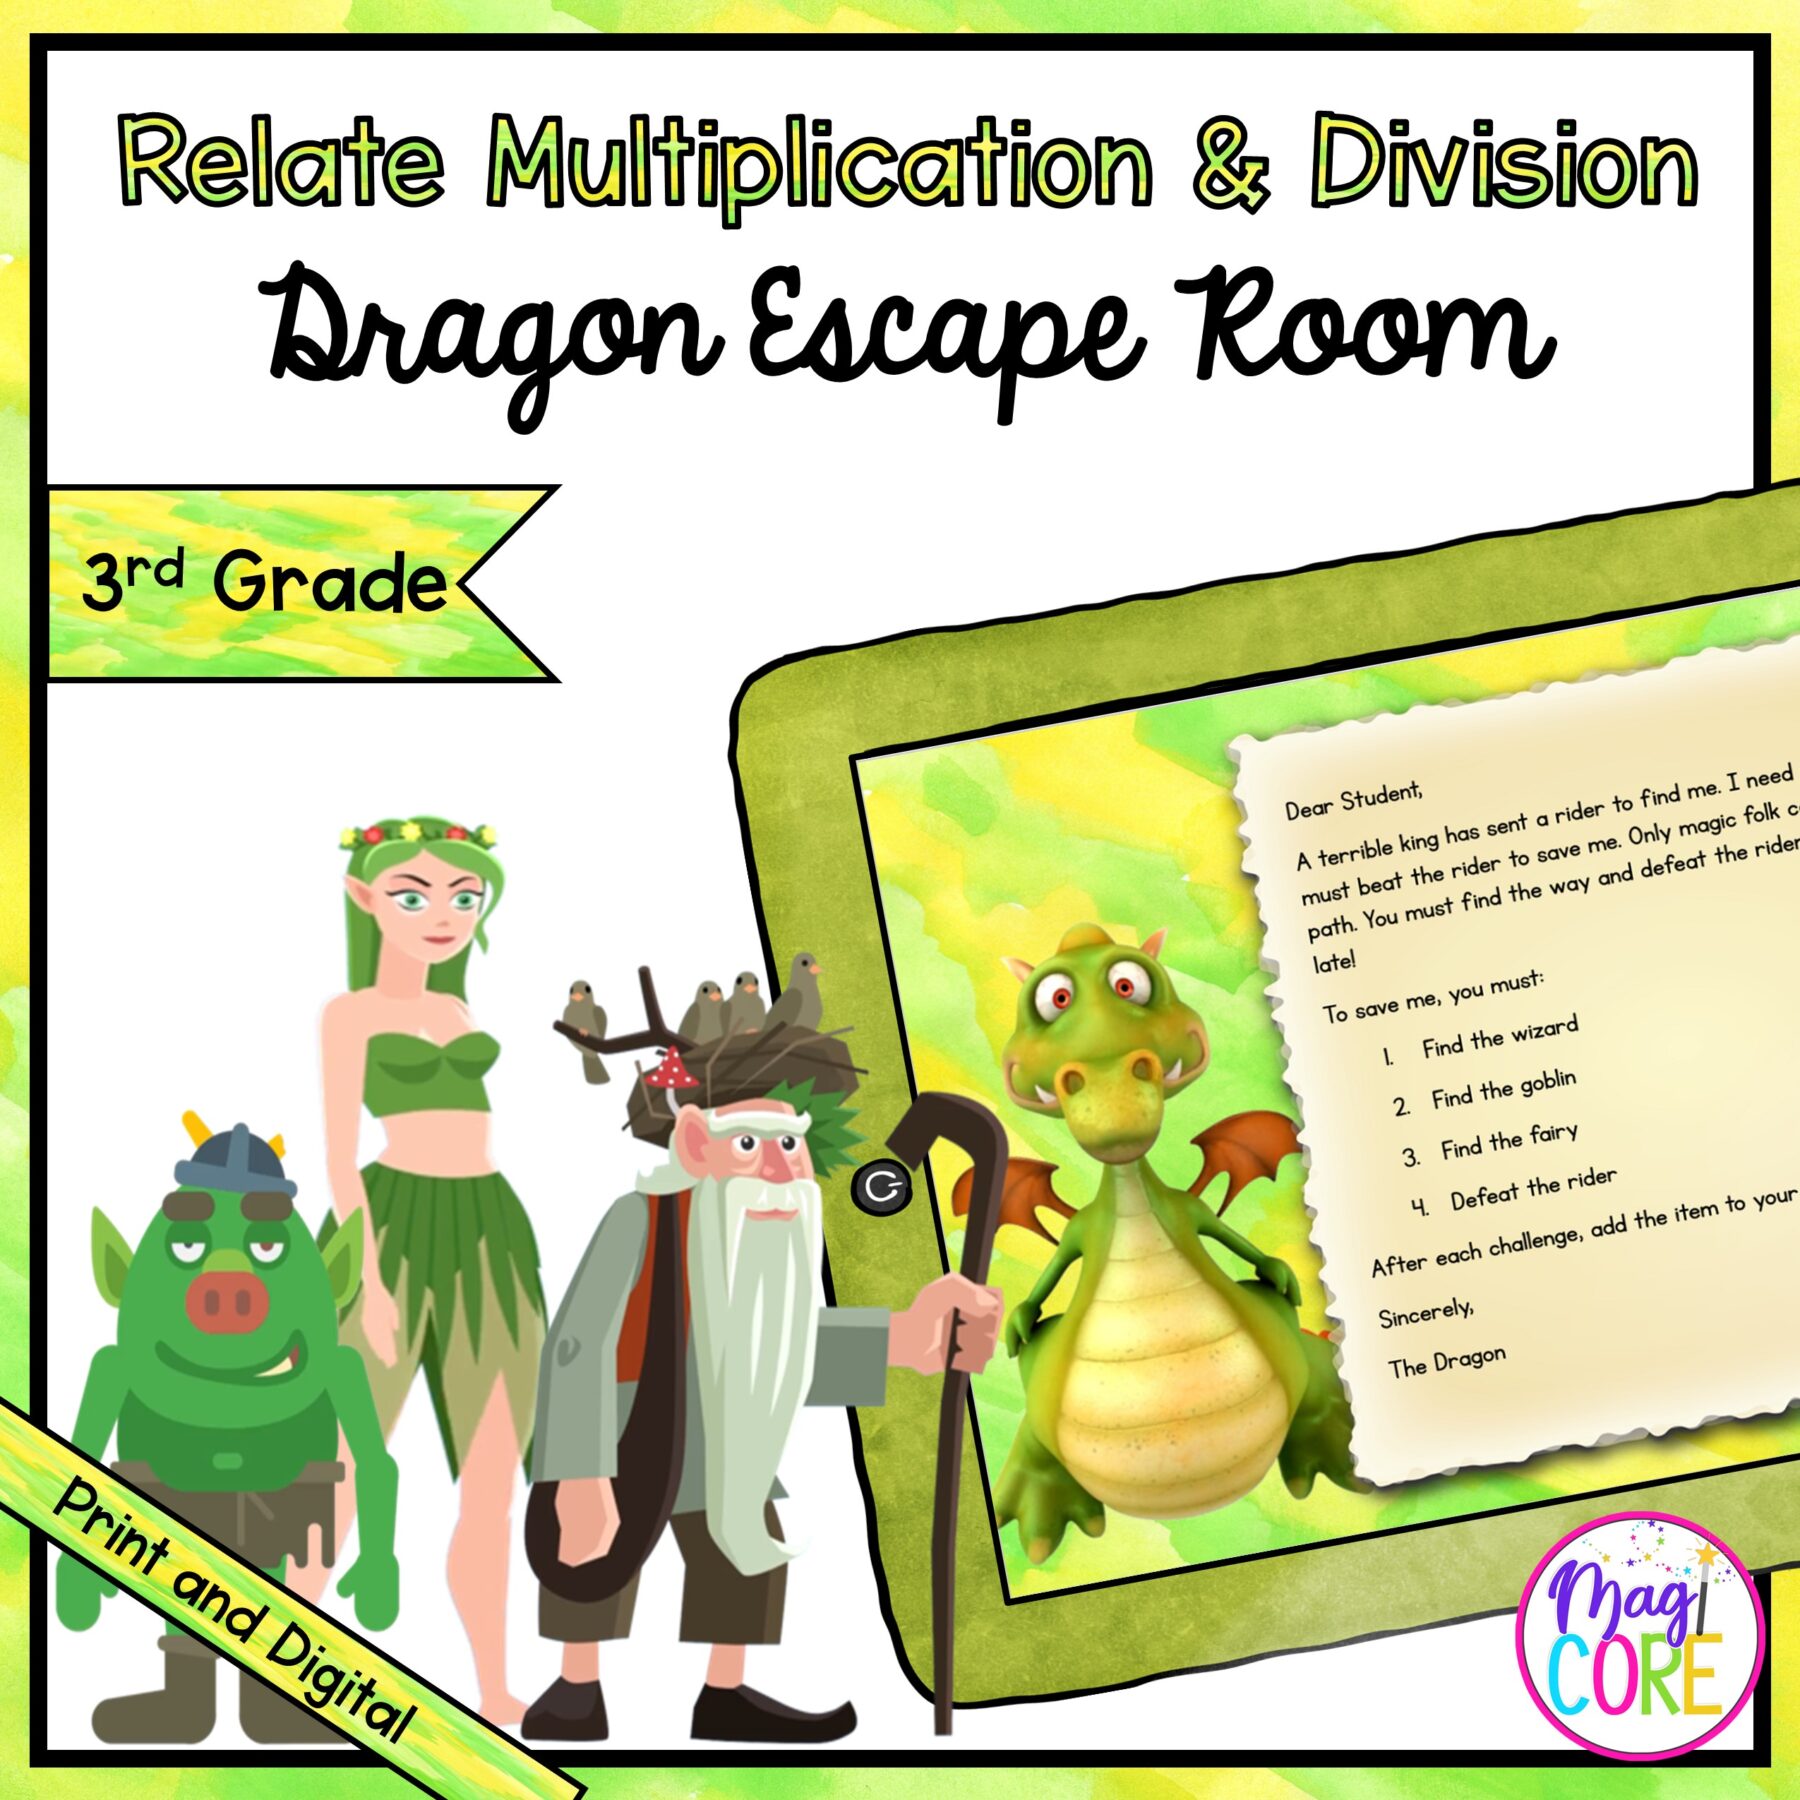 Relate Multiplication & Division 3rd Grade Dragon Escape Room - Digital & Print